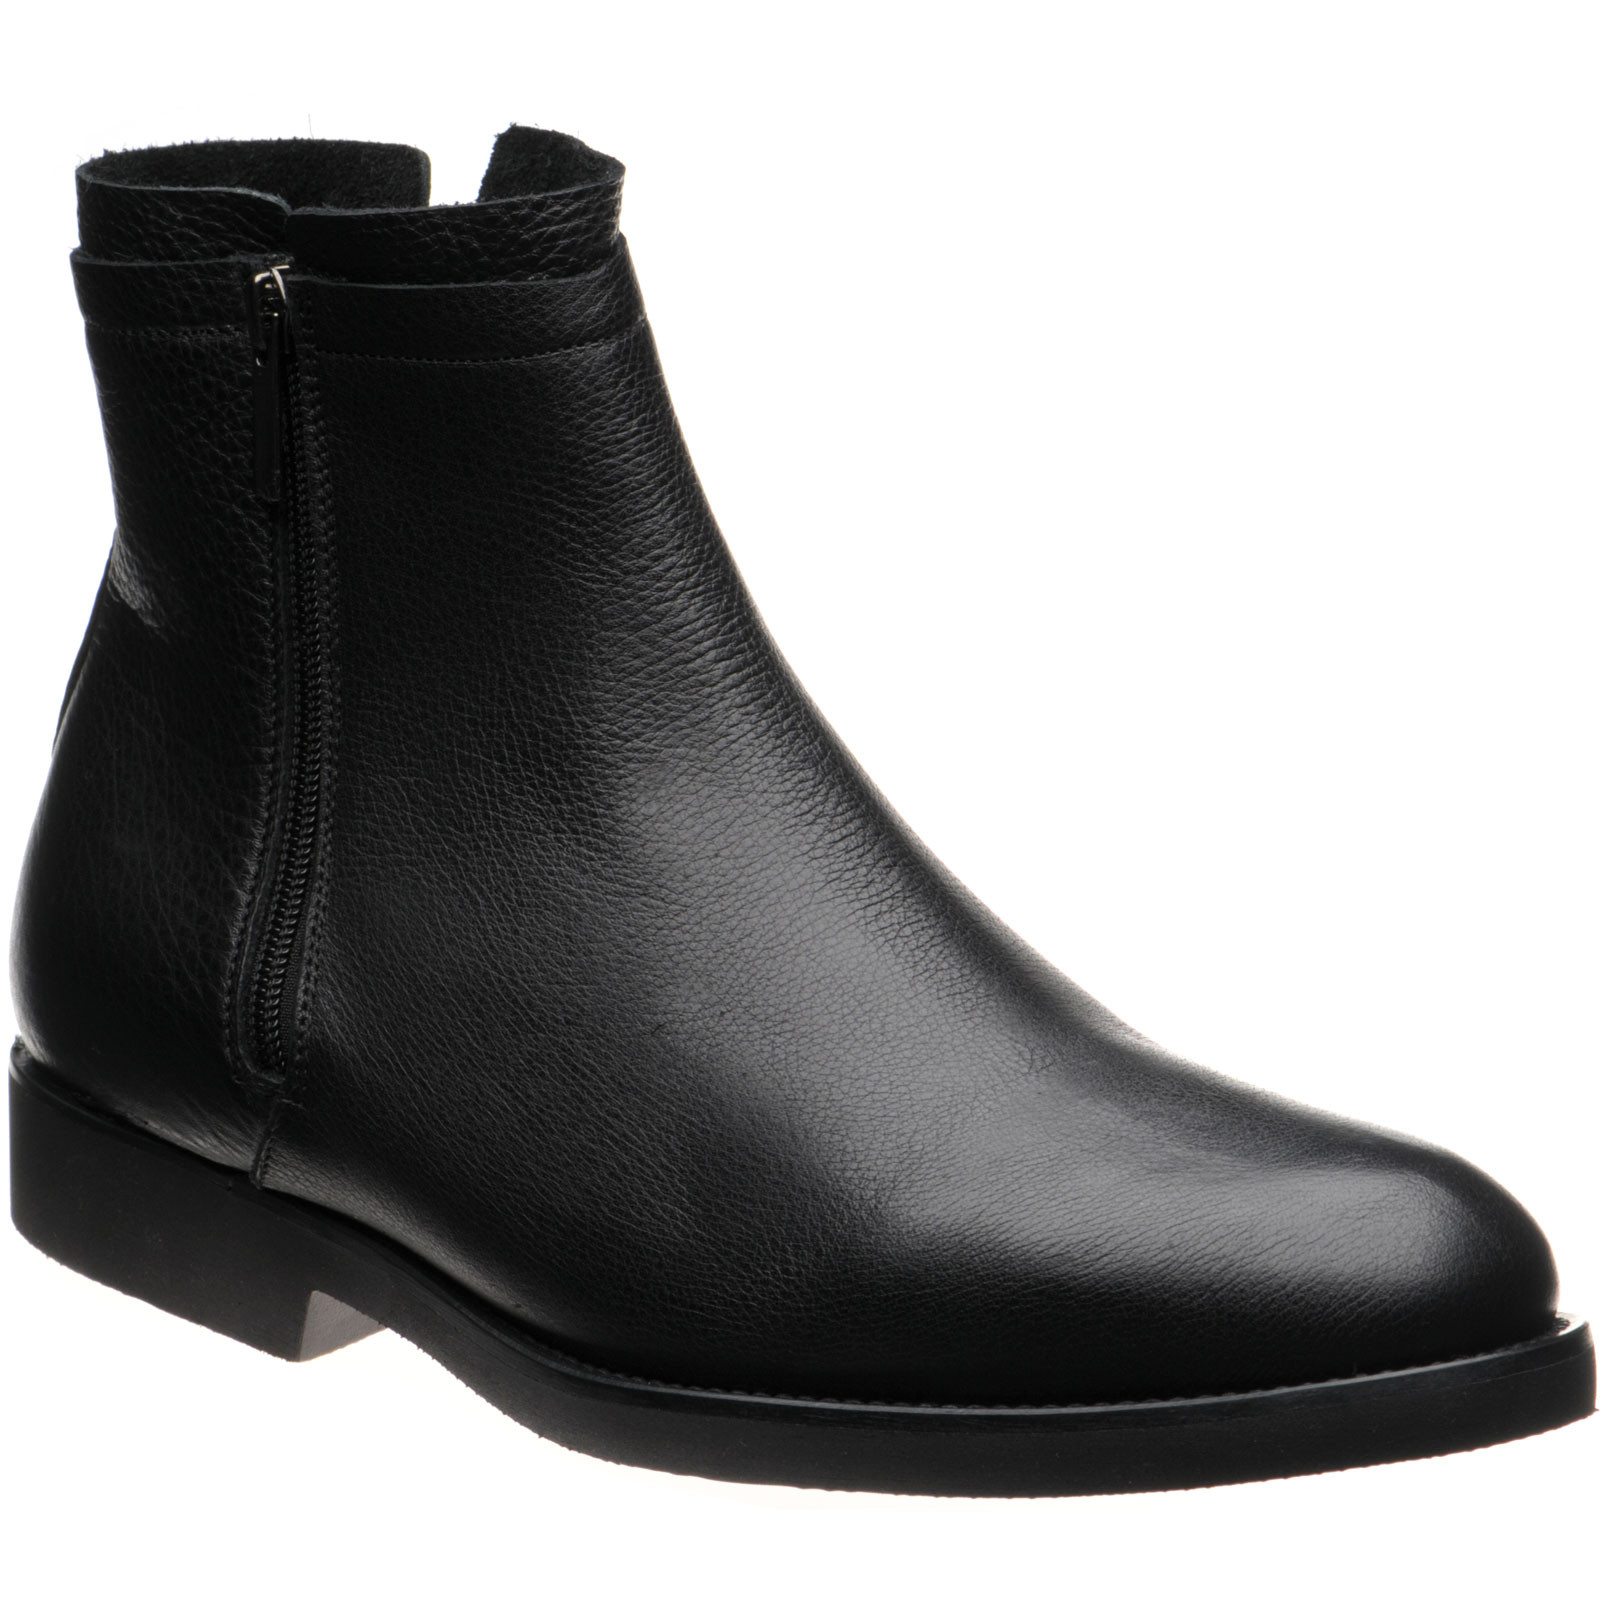 Herring shoes | Herring Classic | Copenhagen (Warm Lined) rubber-soled ...